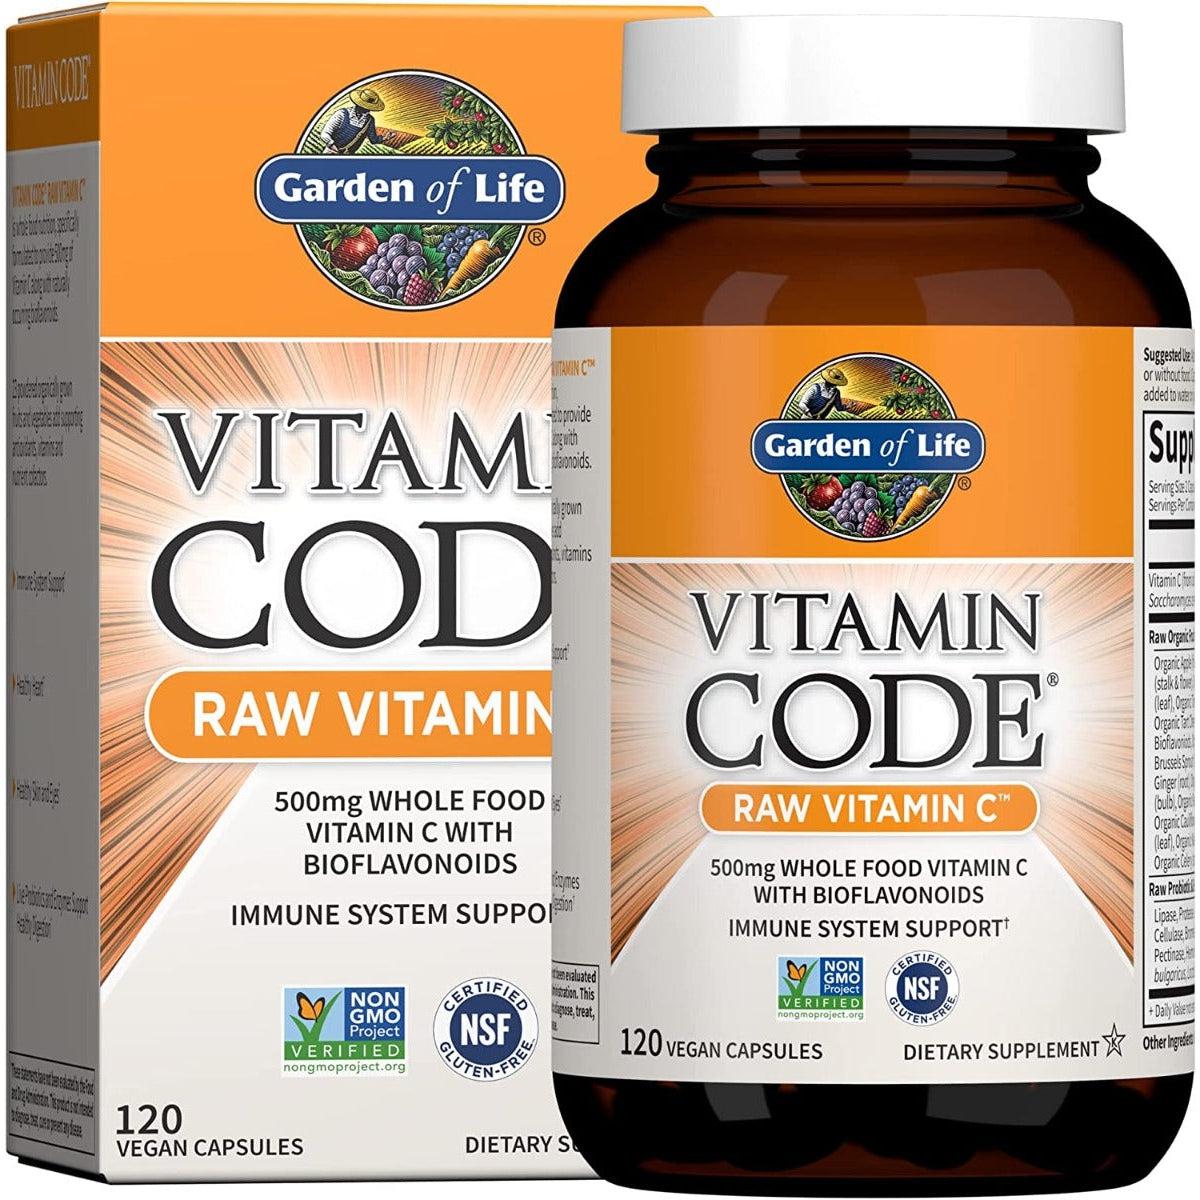 Garden of Life Vitamin Code RAW Vitamin C 120 Vegan Capsules